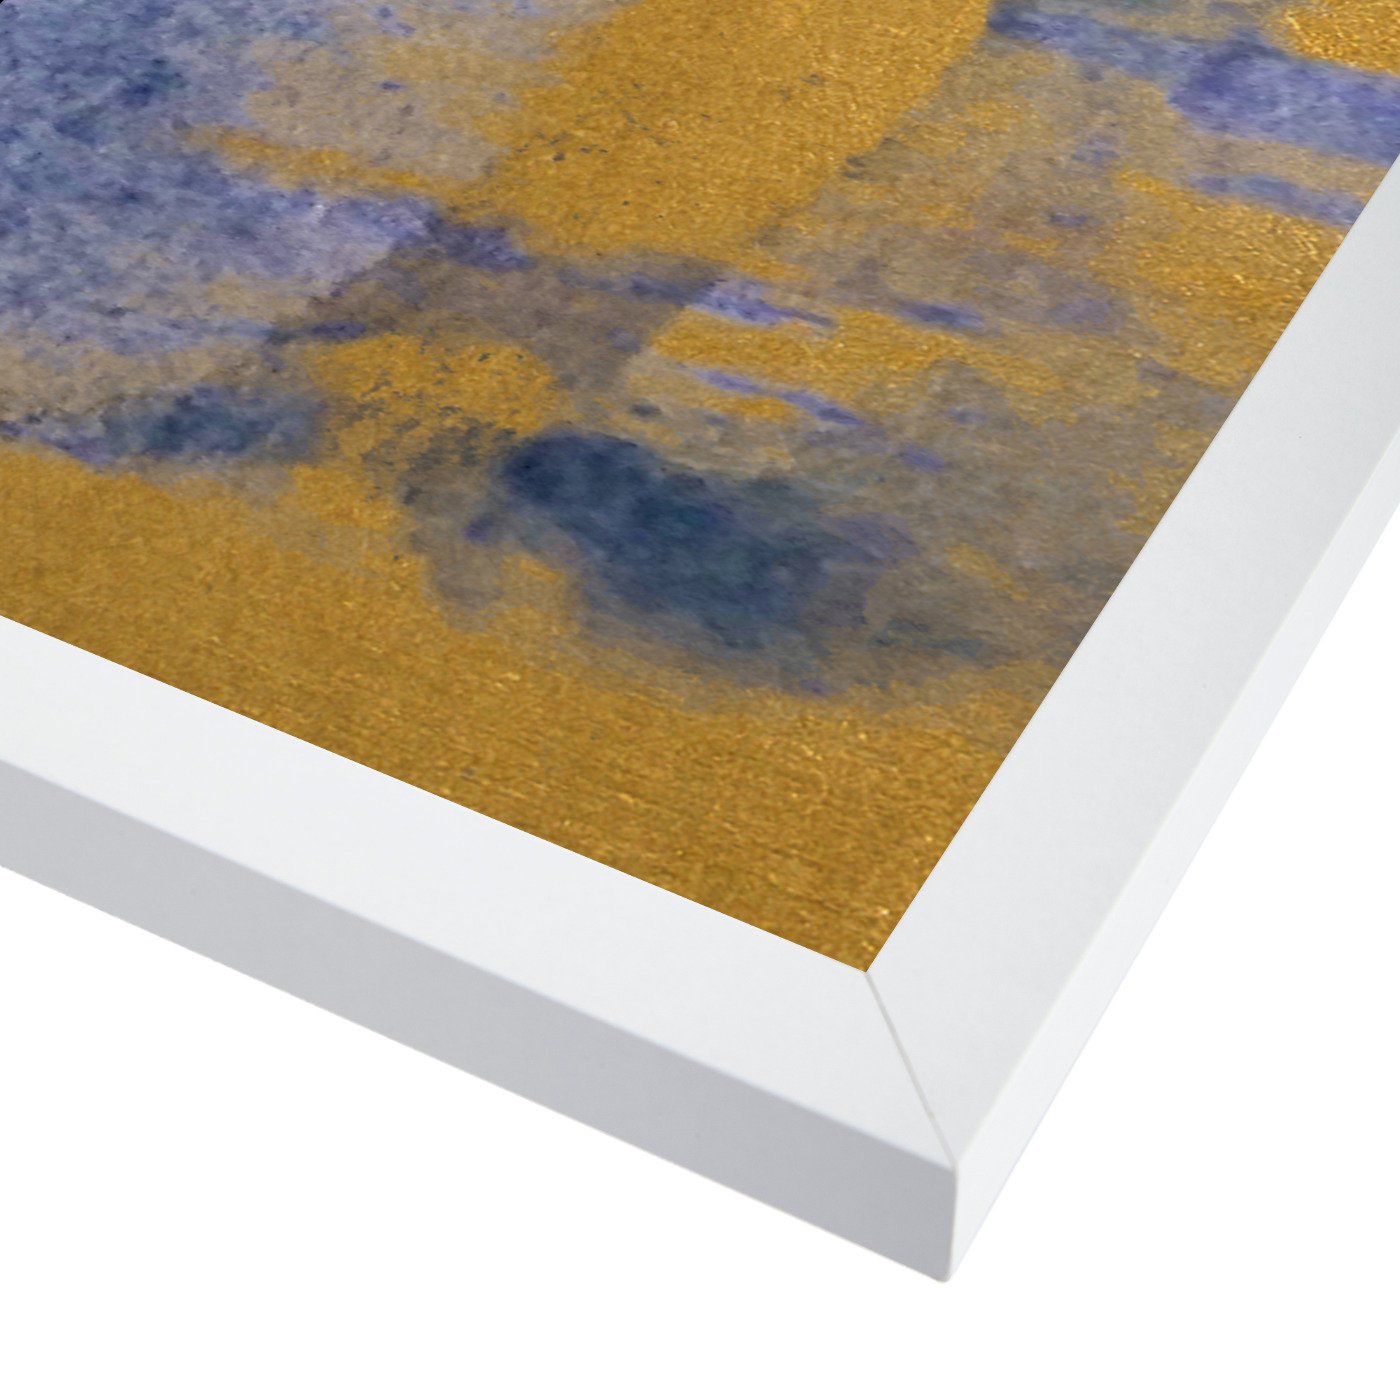 Gold Dust II by Hope Bainbridge - Framed Print - Americanflat